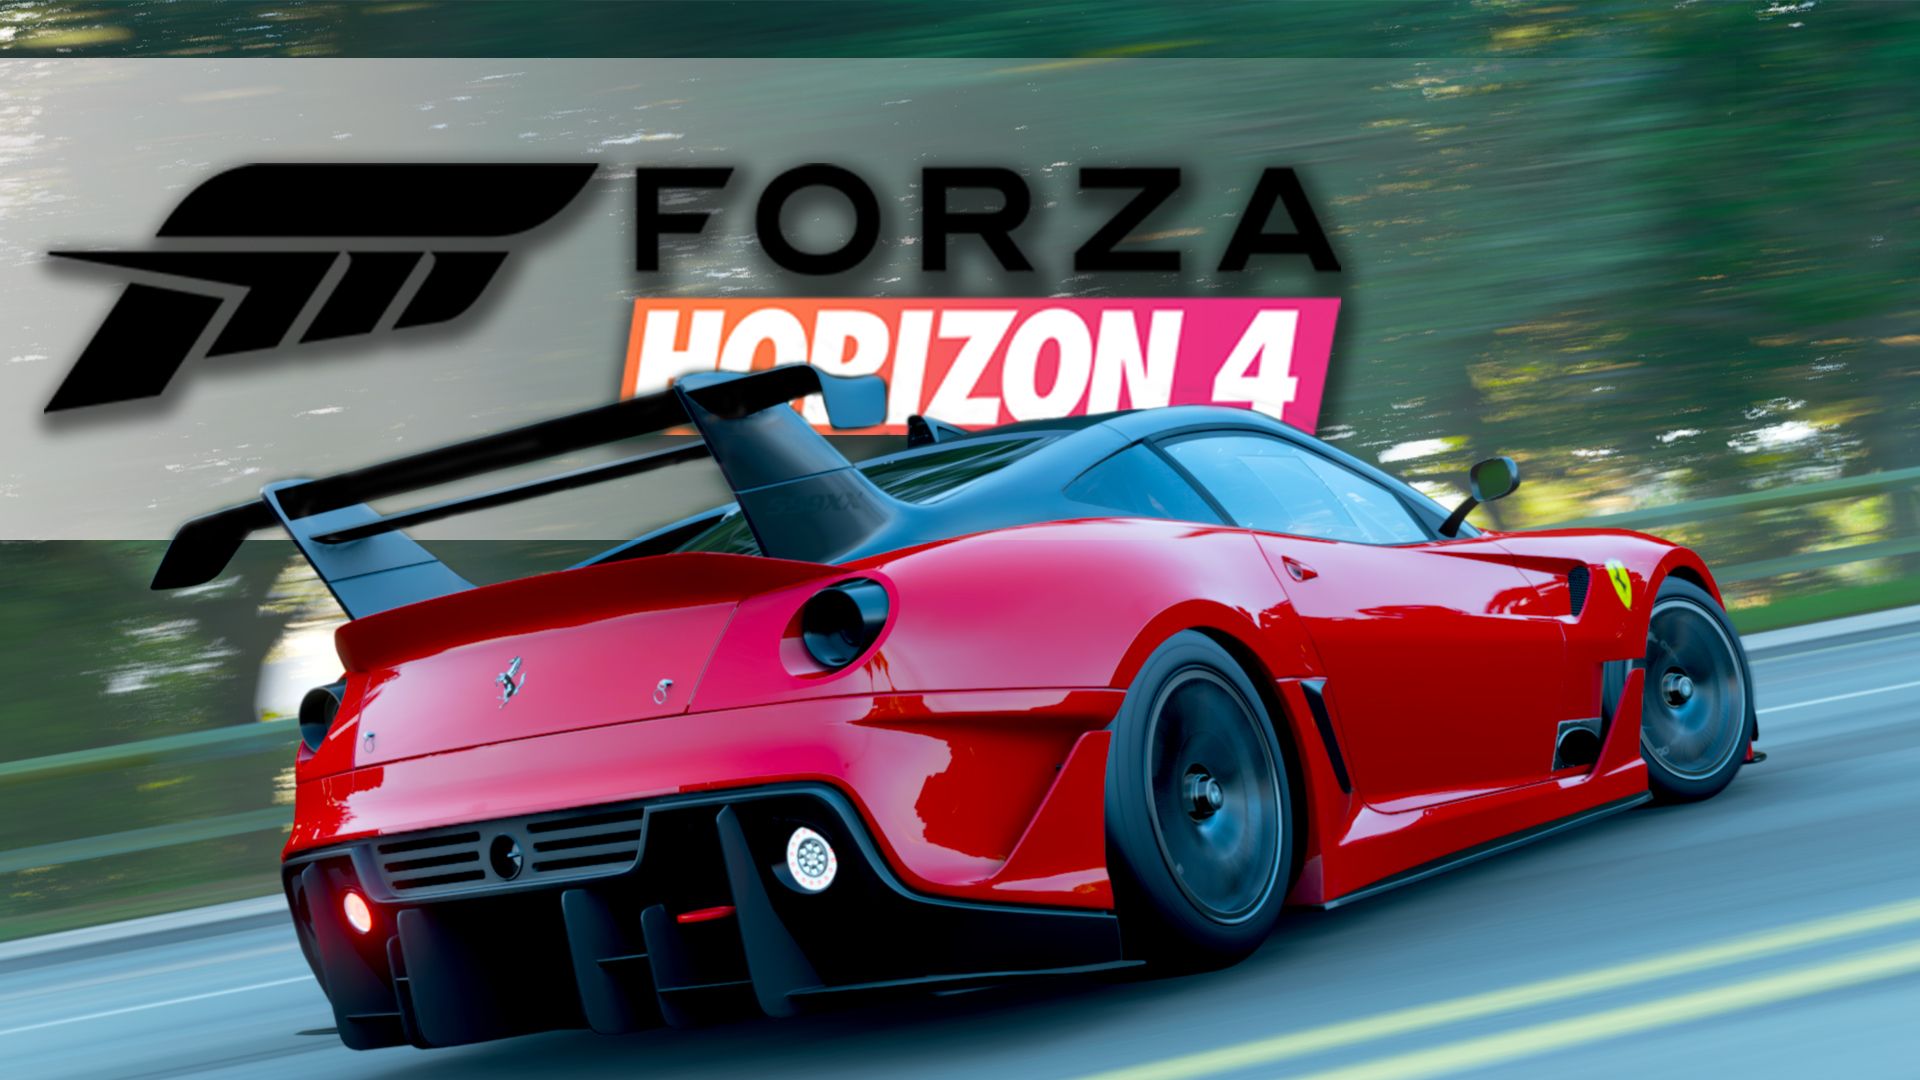 Ferrari forza horizon. Феррари 599xx EVO Forza Horizon 5. Ferrari 599xx EVO Forza Horizon. Ferrari 599xx Forza Horizon. Ferrari 599xx Evolution Forza Horizon.